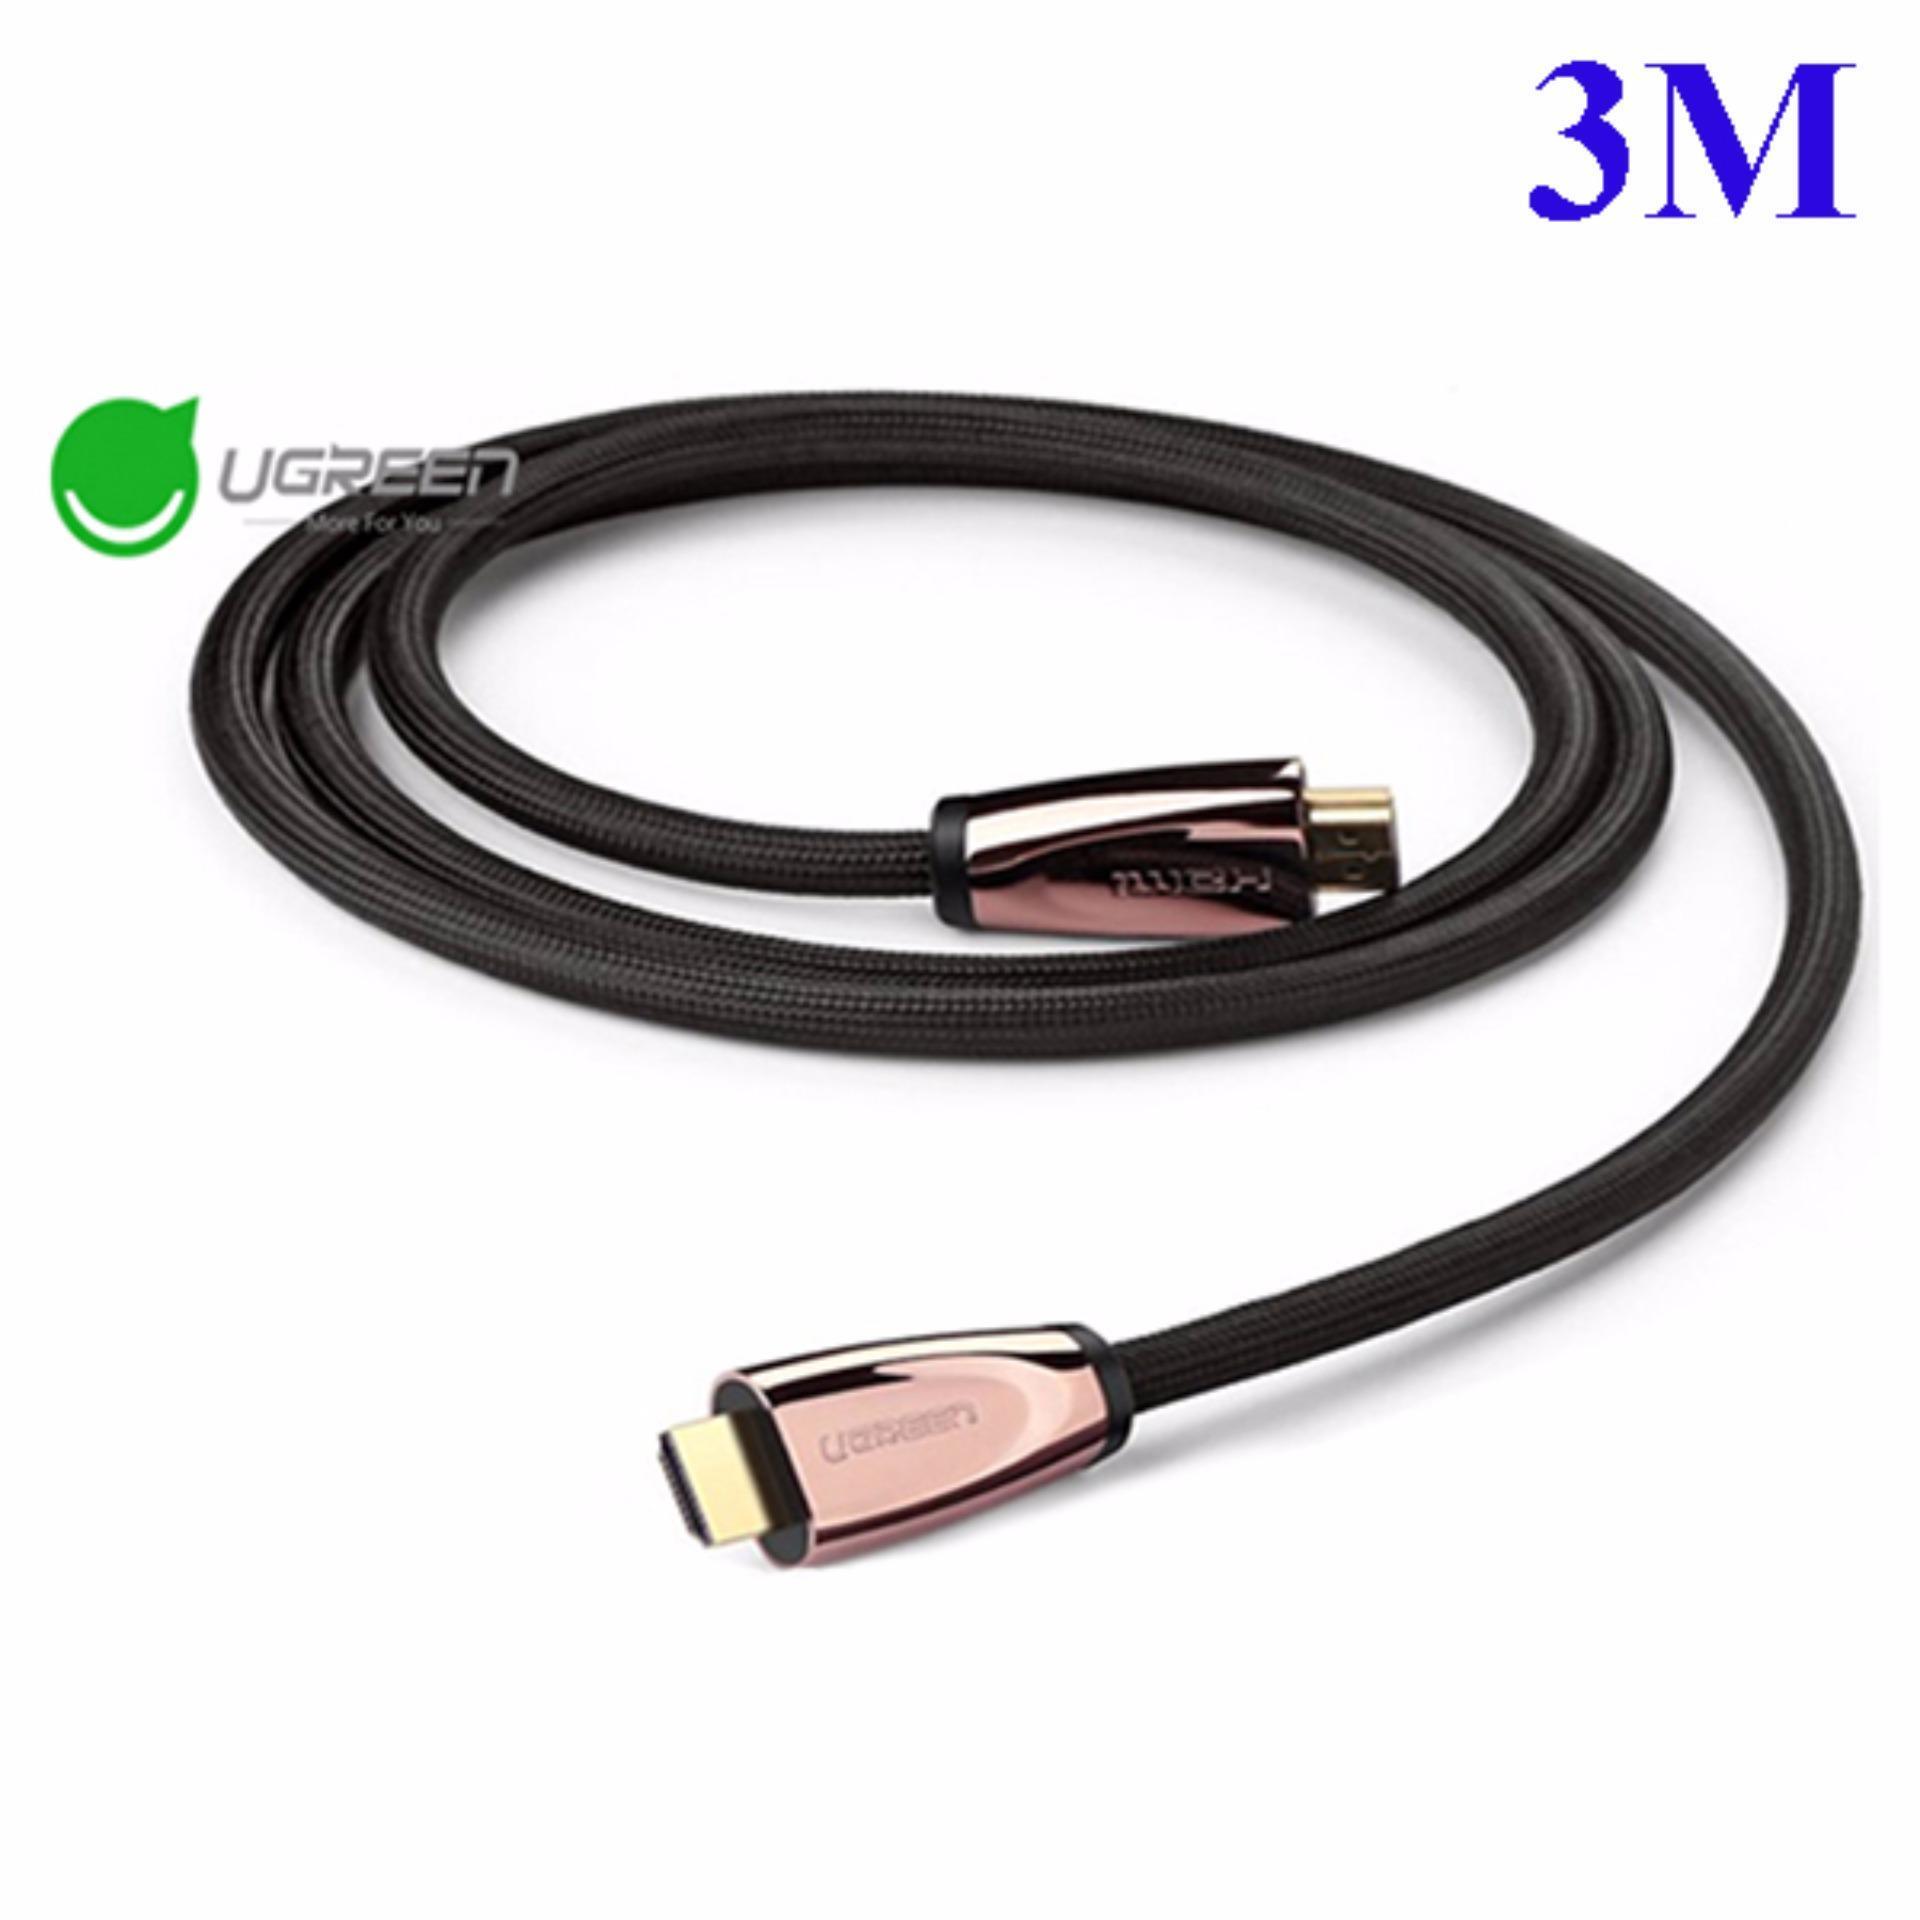 Cáp HDMI Ugreen UG-30604 - 2.0, 3M